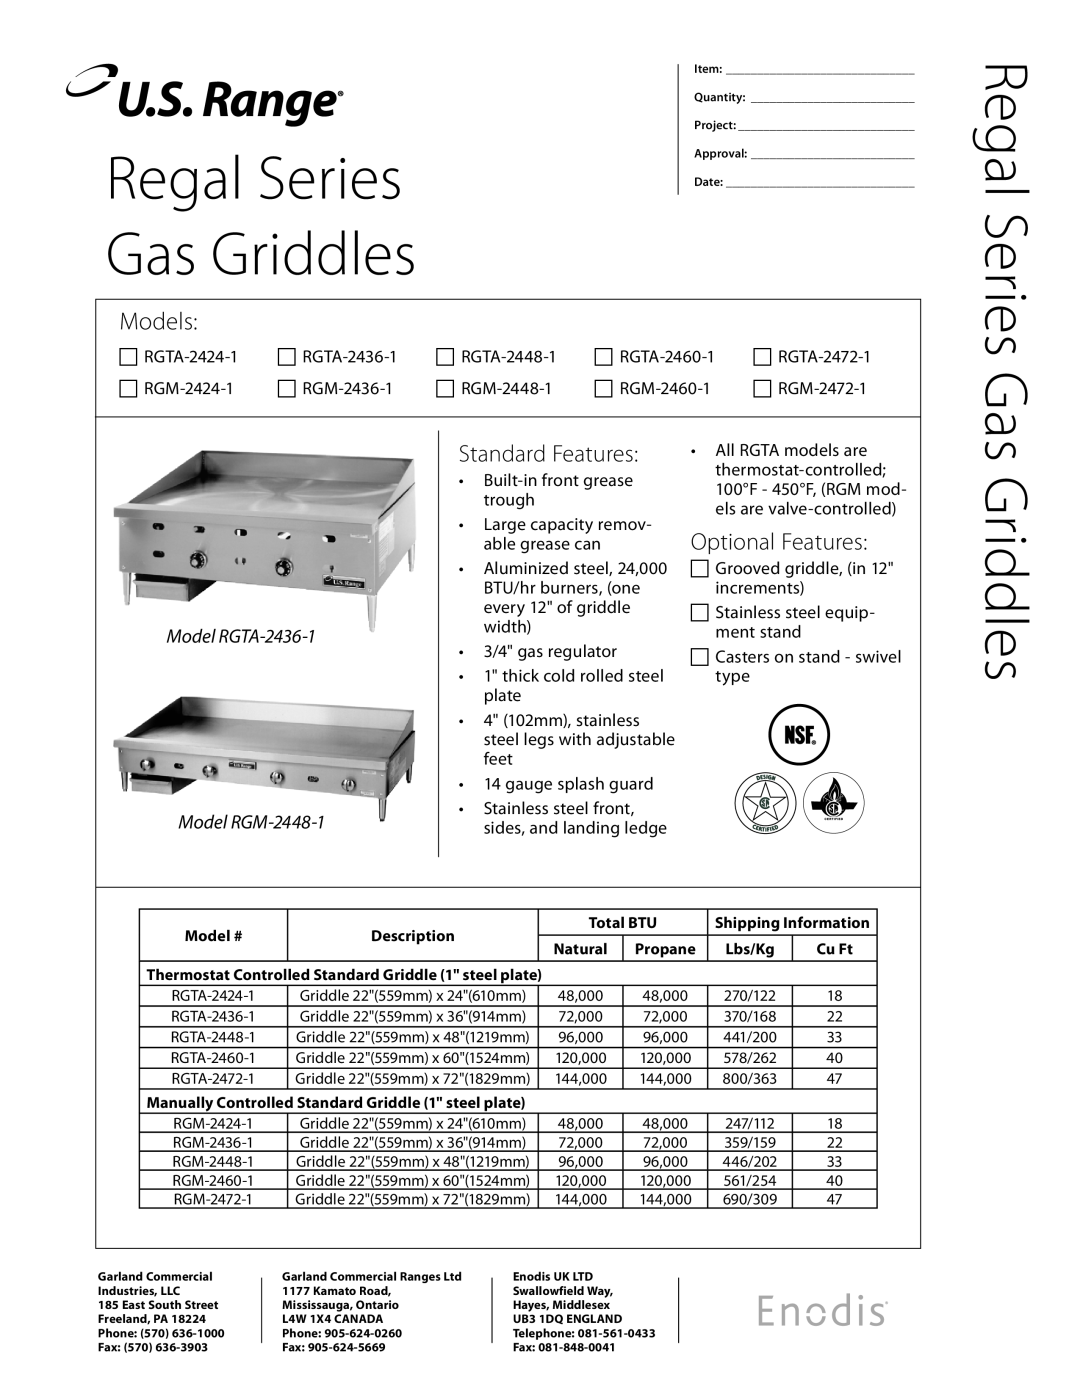 Garland RGTA-2460-1 manual Gas Griddles, Regal Series Gas, Models, Standard Features, Optional Features 